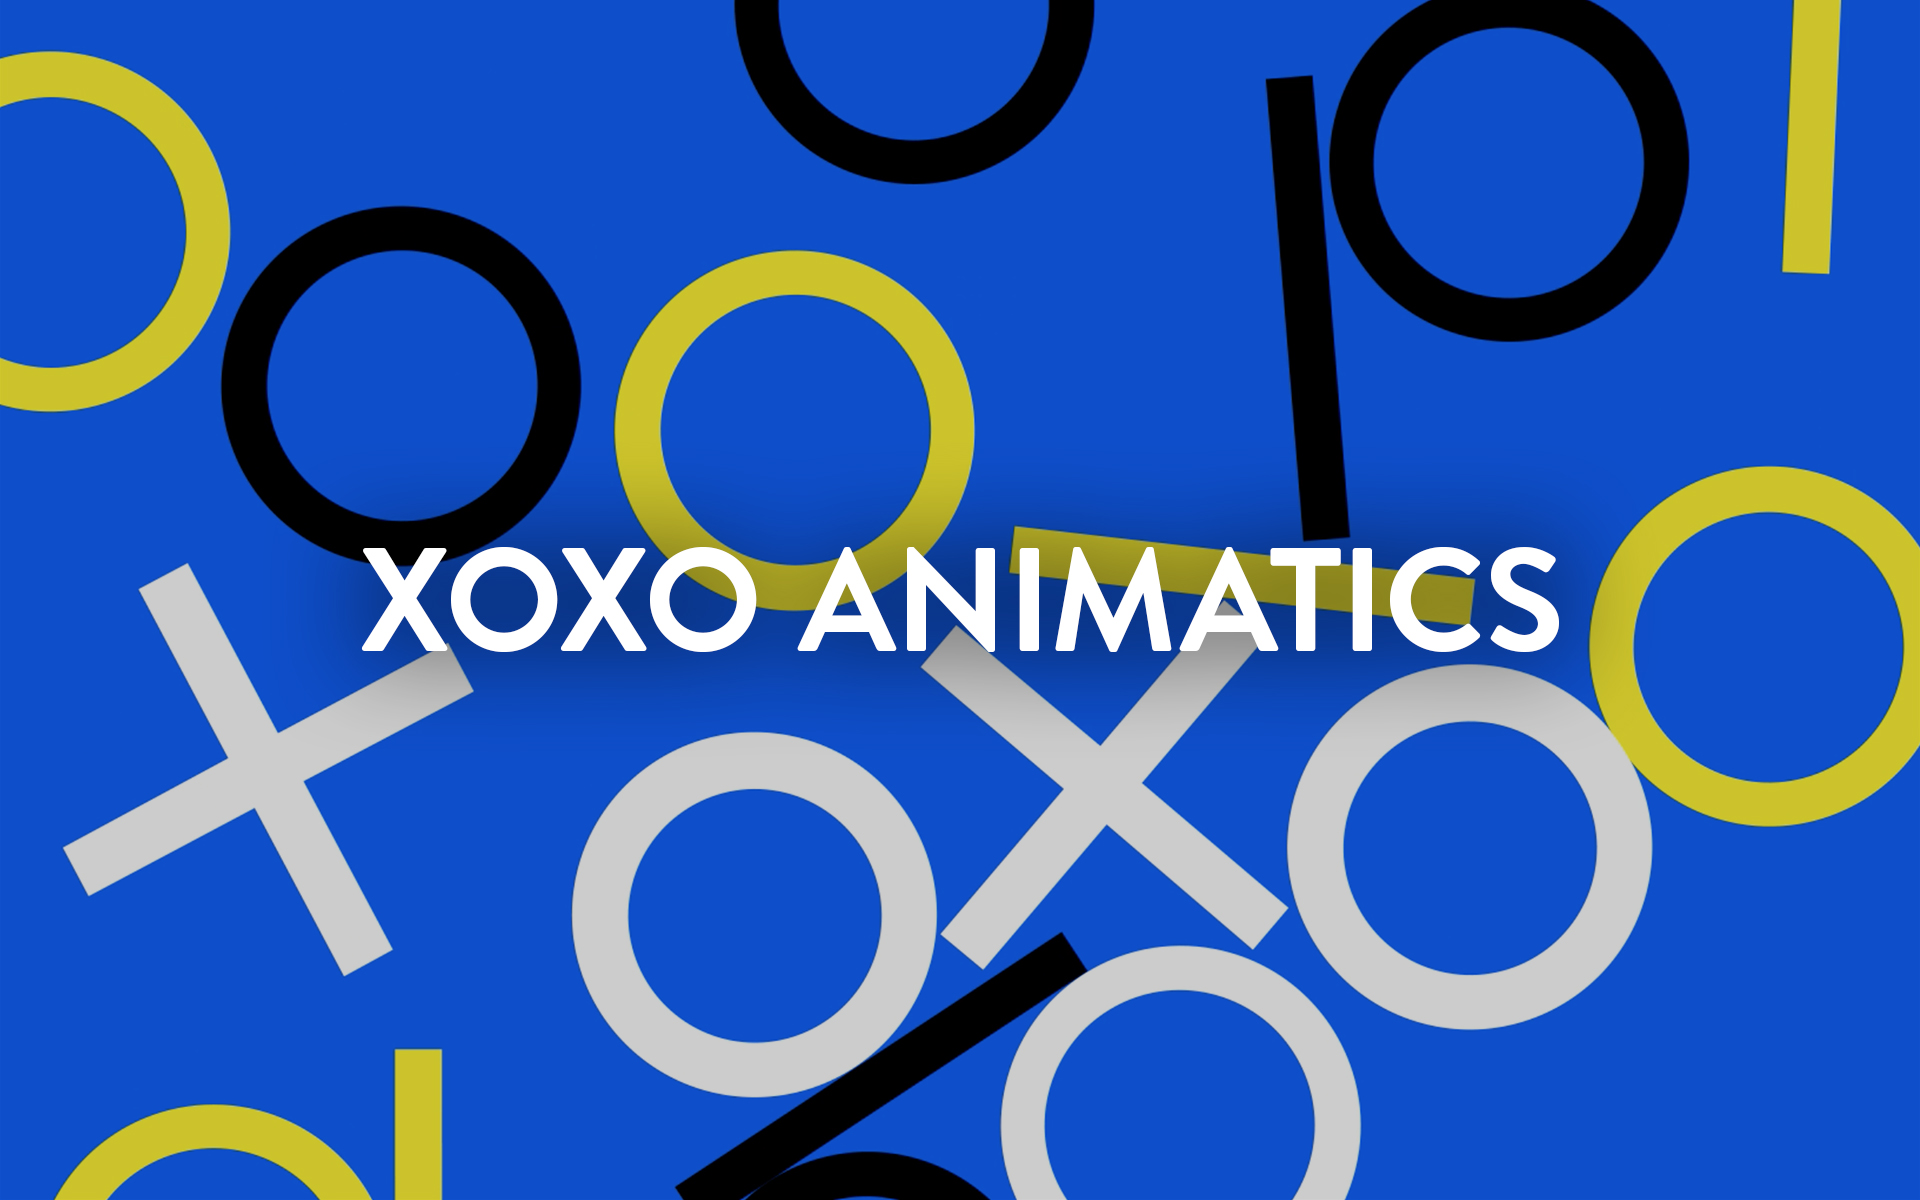 XOXO 2015 ANIMATICS